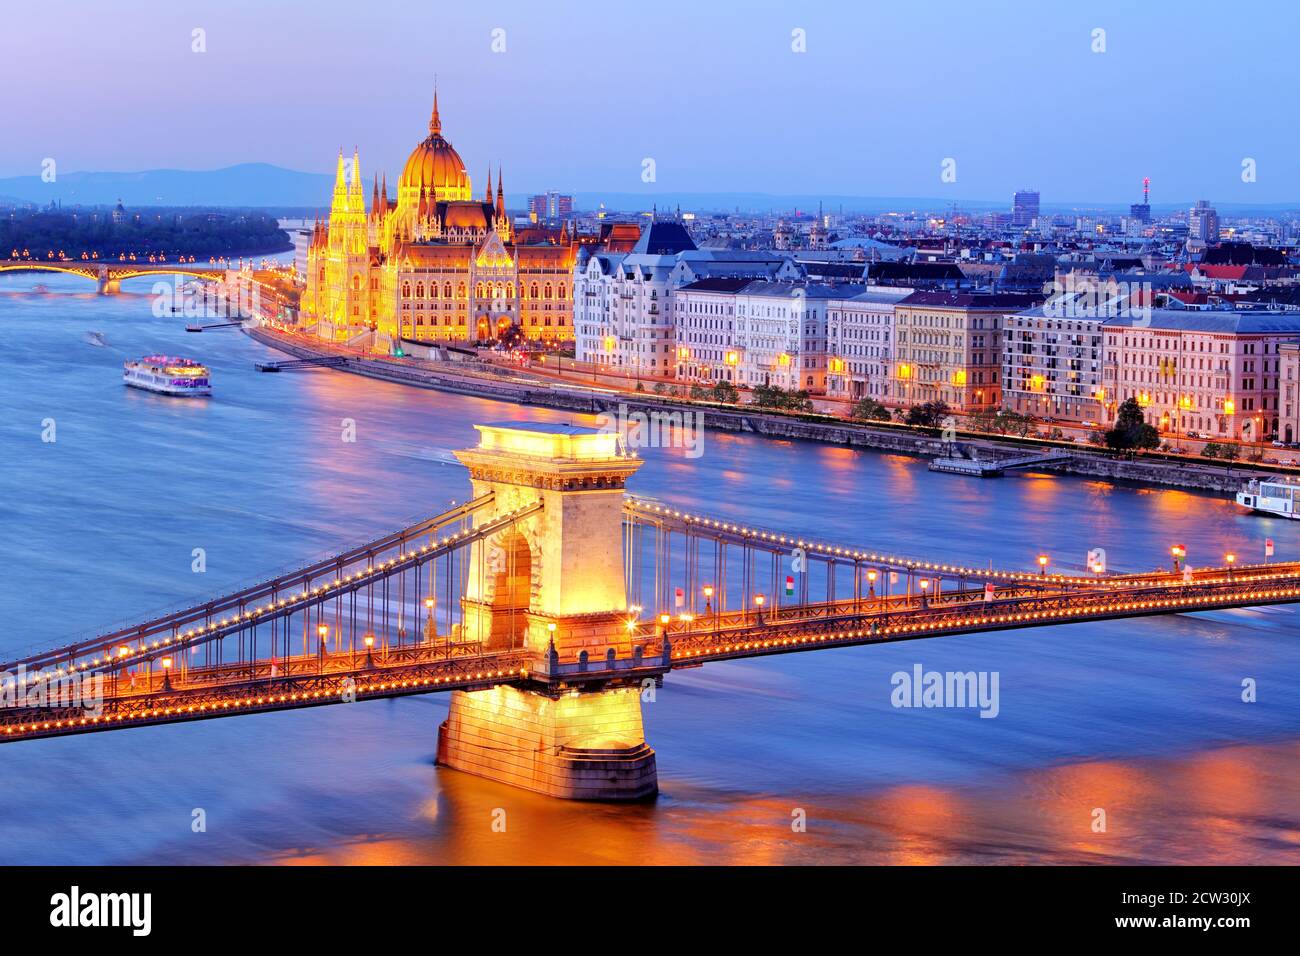 Budapest at night - Parliament, Hungary Stock Photo